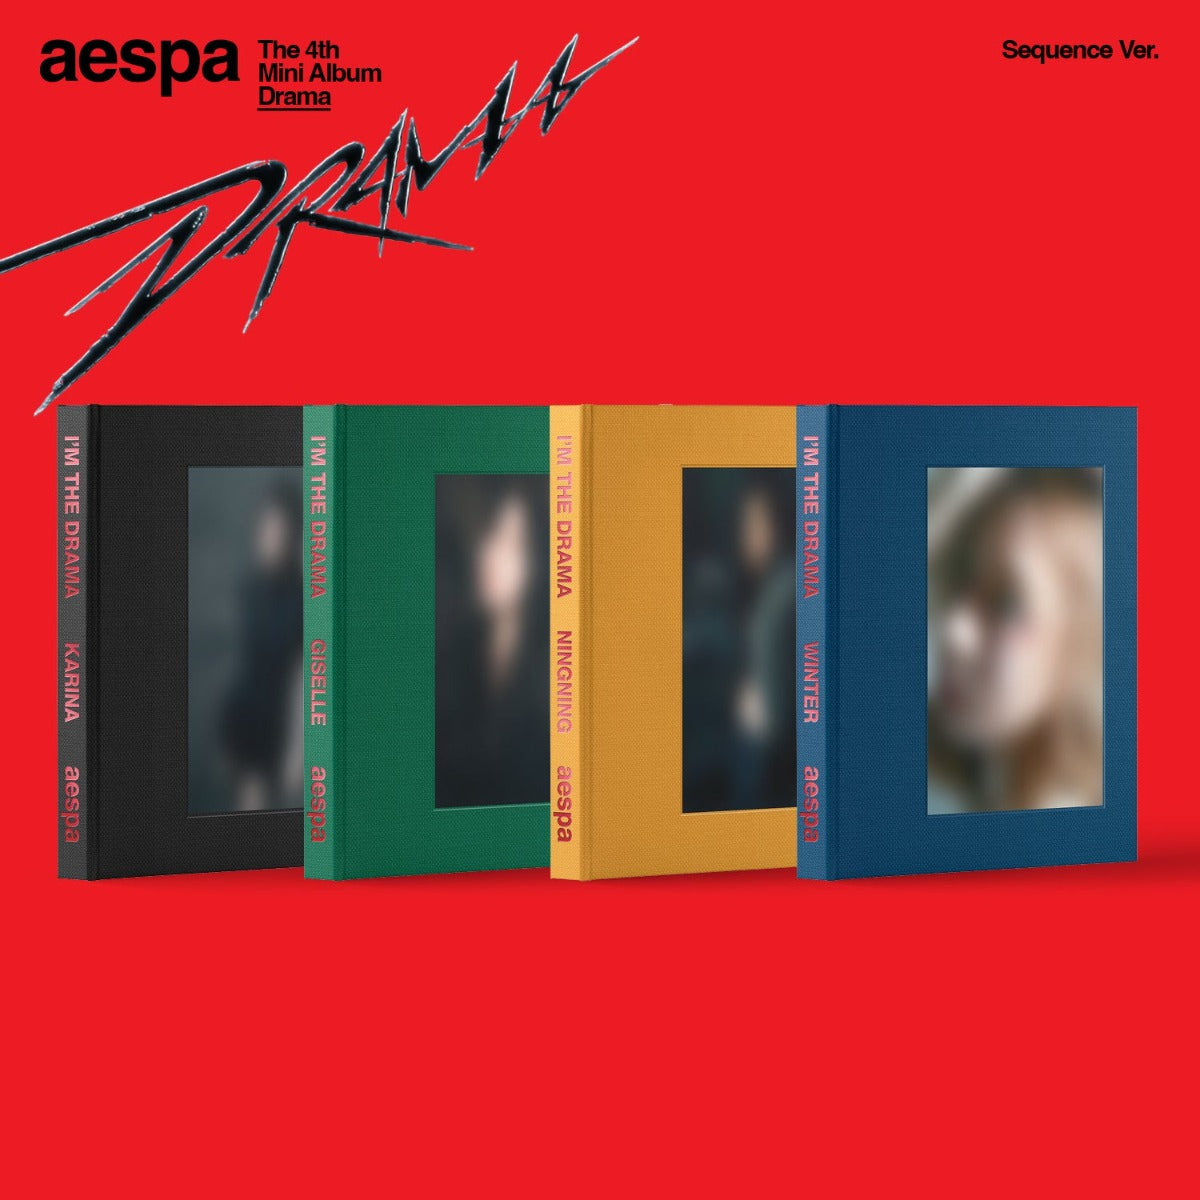 aespa Mini Album Vol. 4 - Drama (Sequence Version)